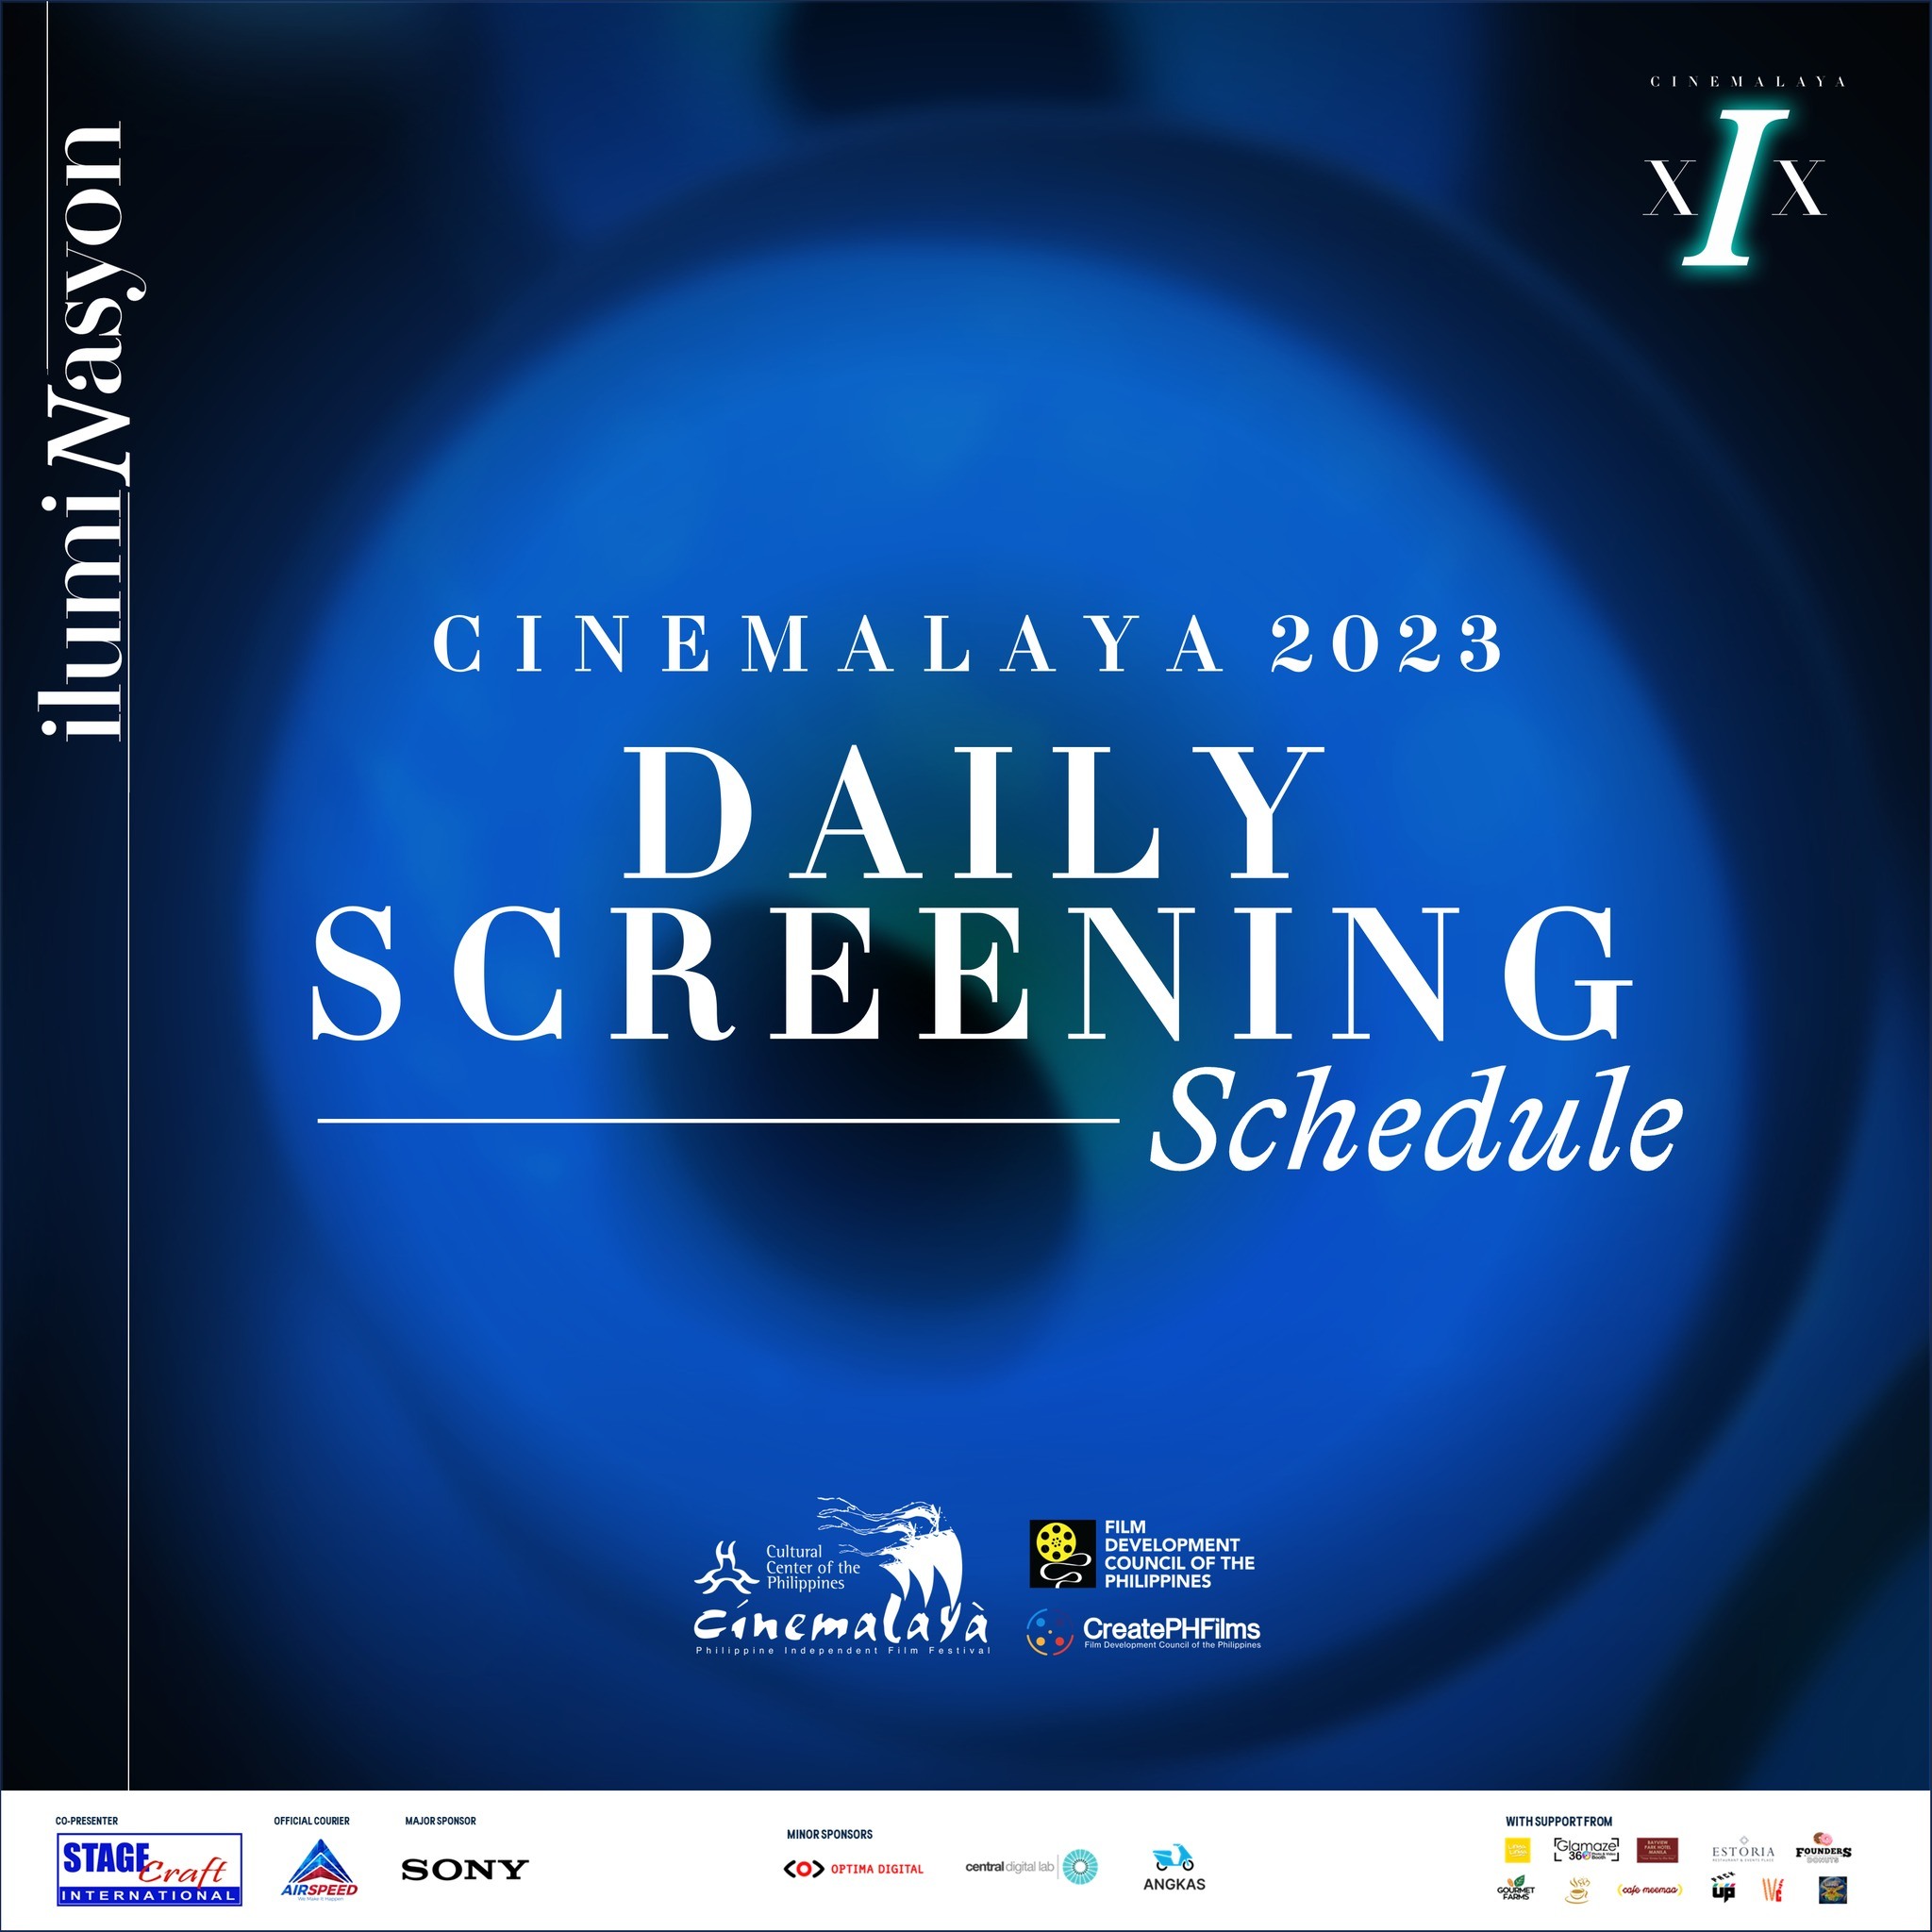 Cinemalaya Daily schedule